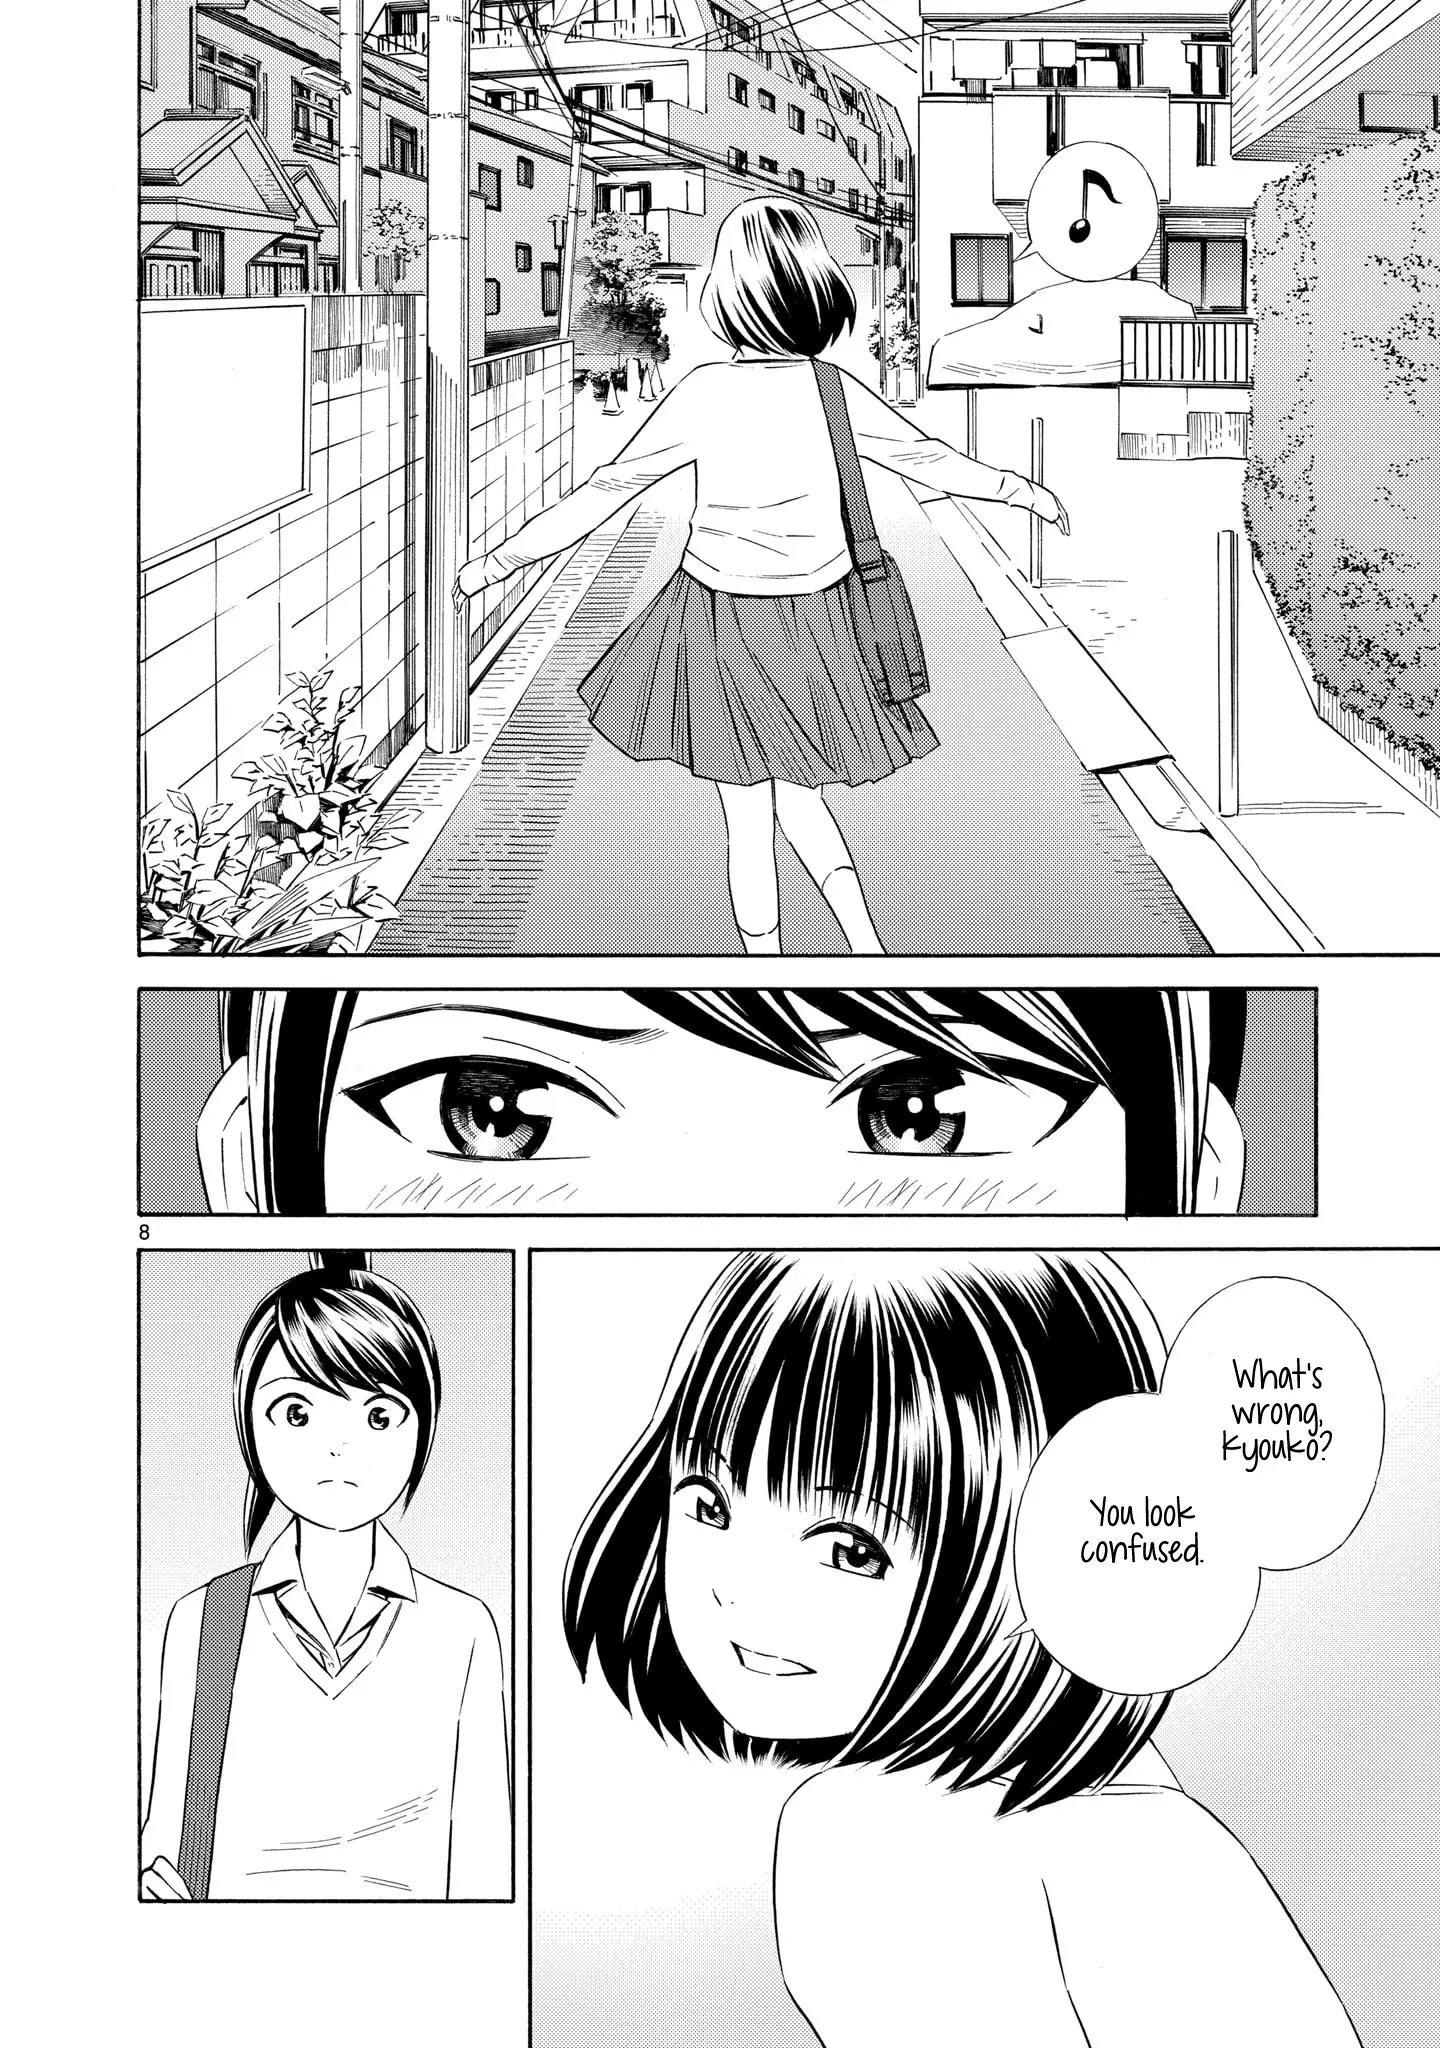 Kyou Kara Mirai - 1 page 8